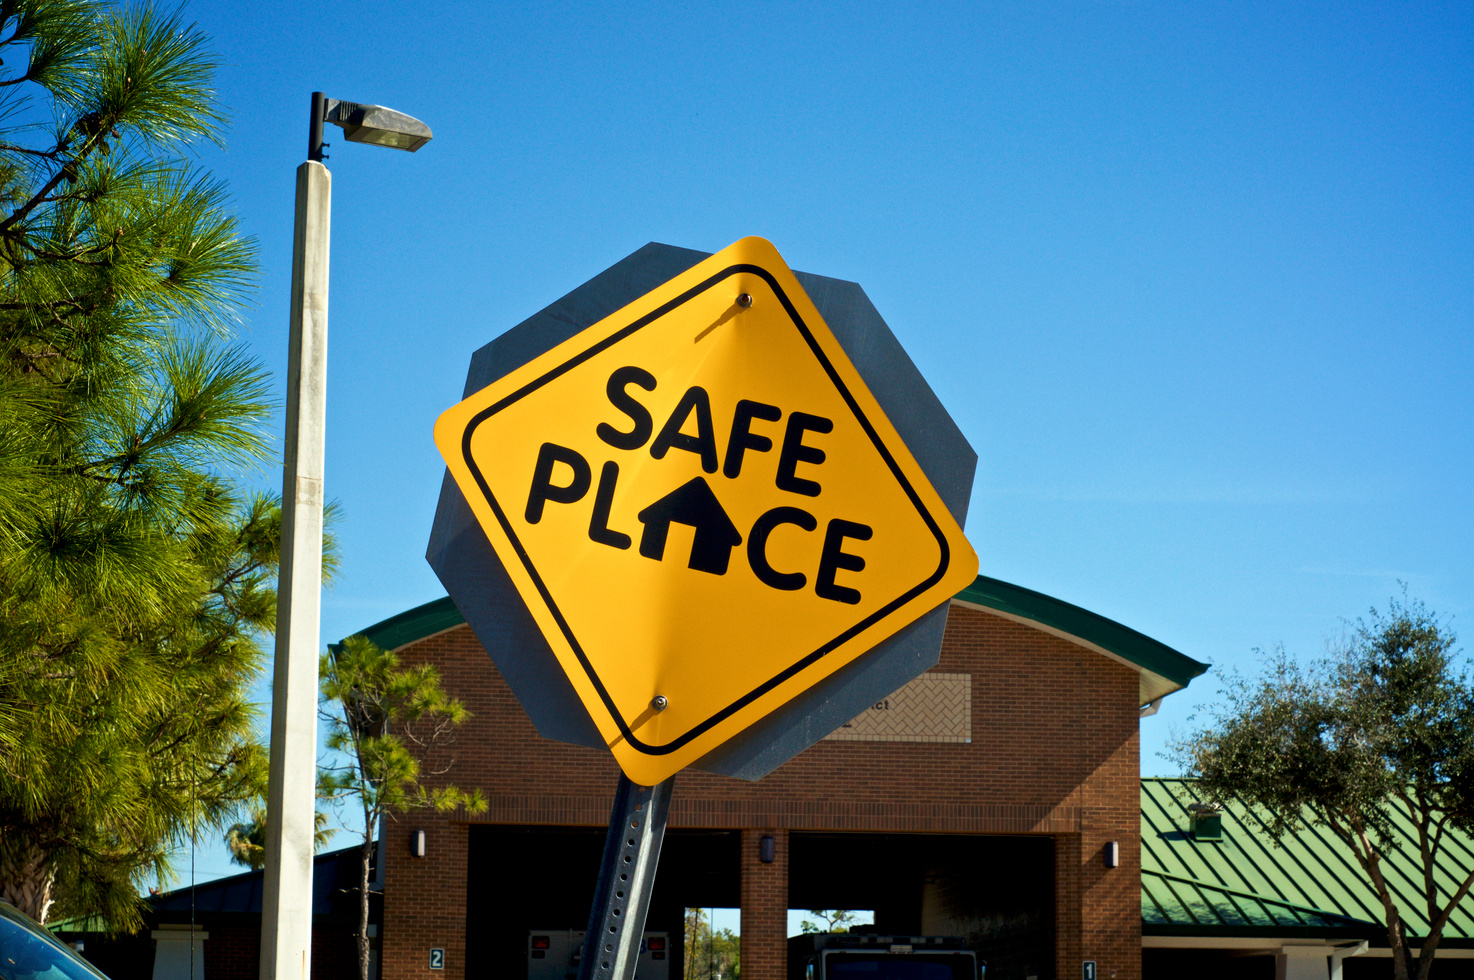 Safe Place street sign